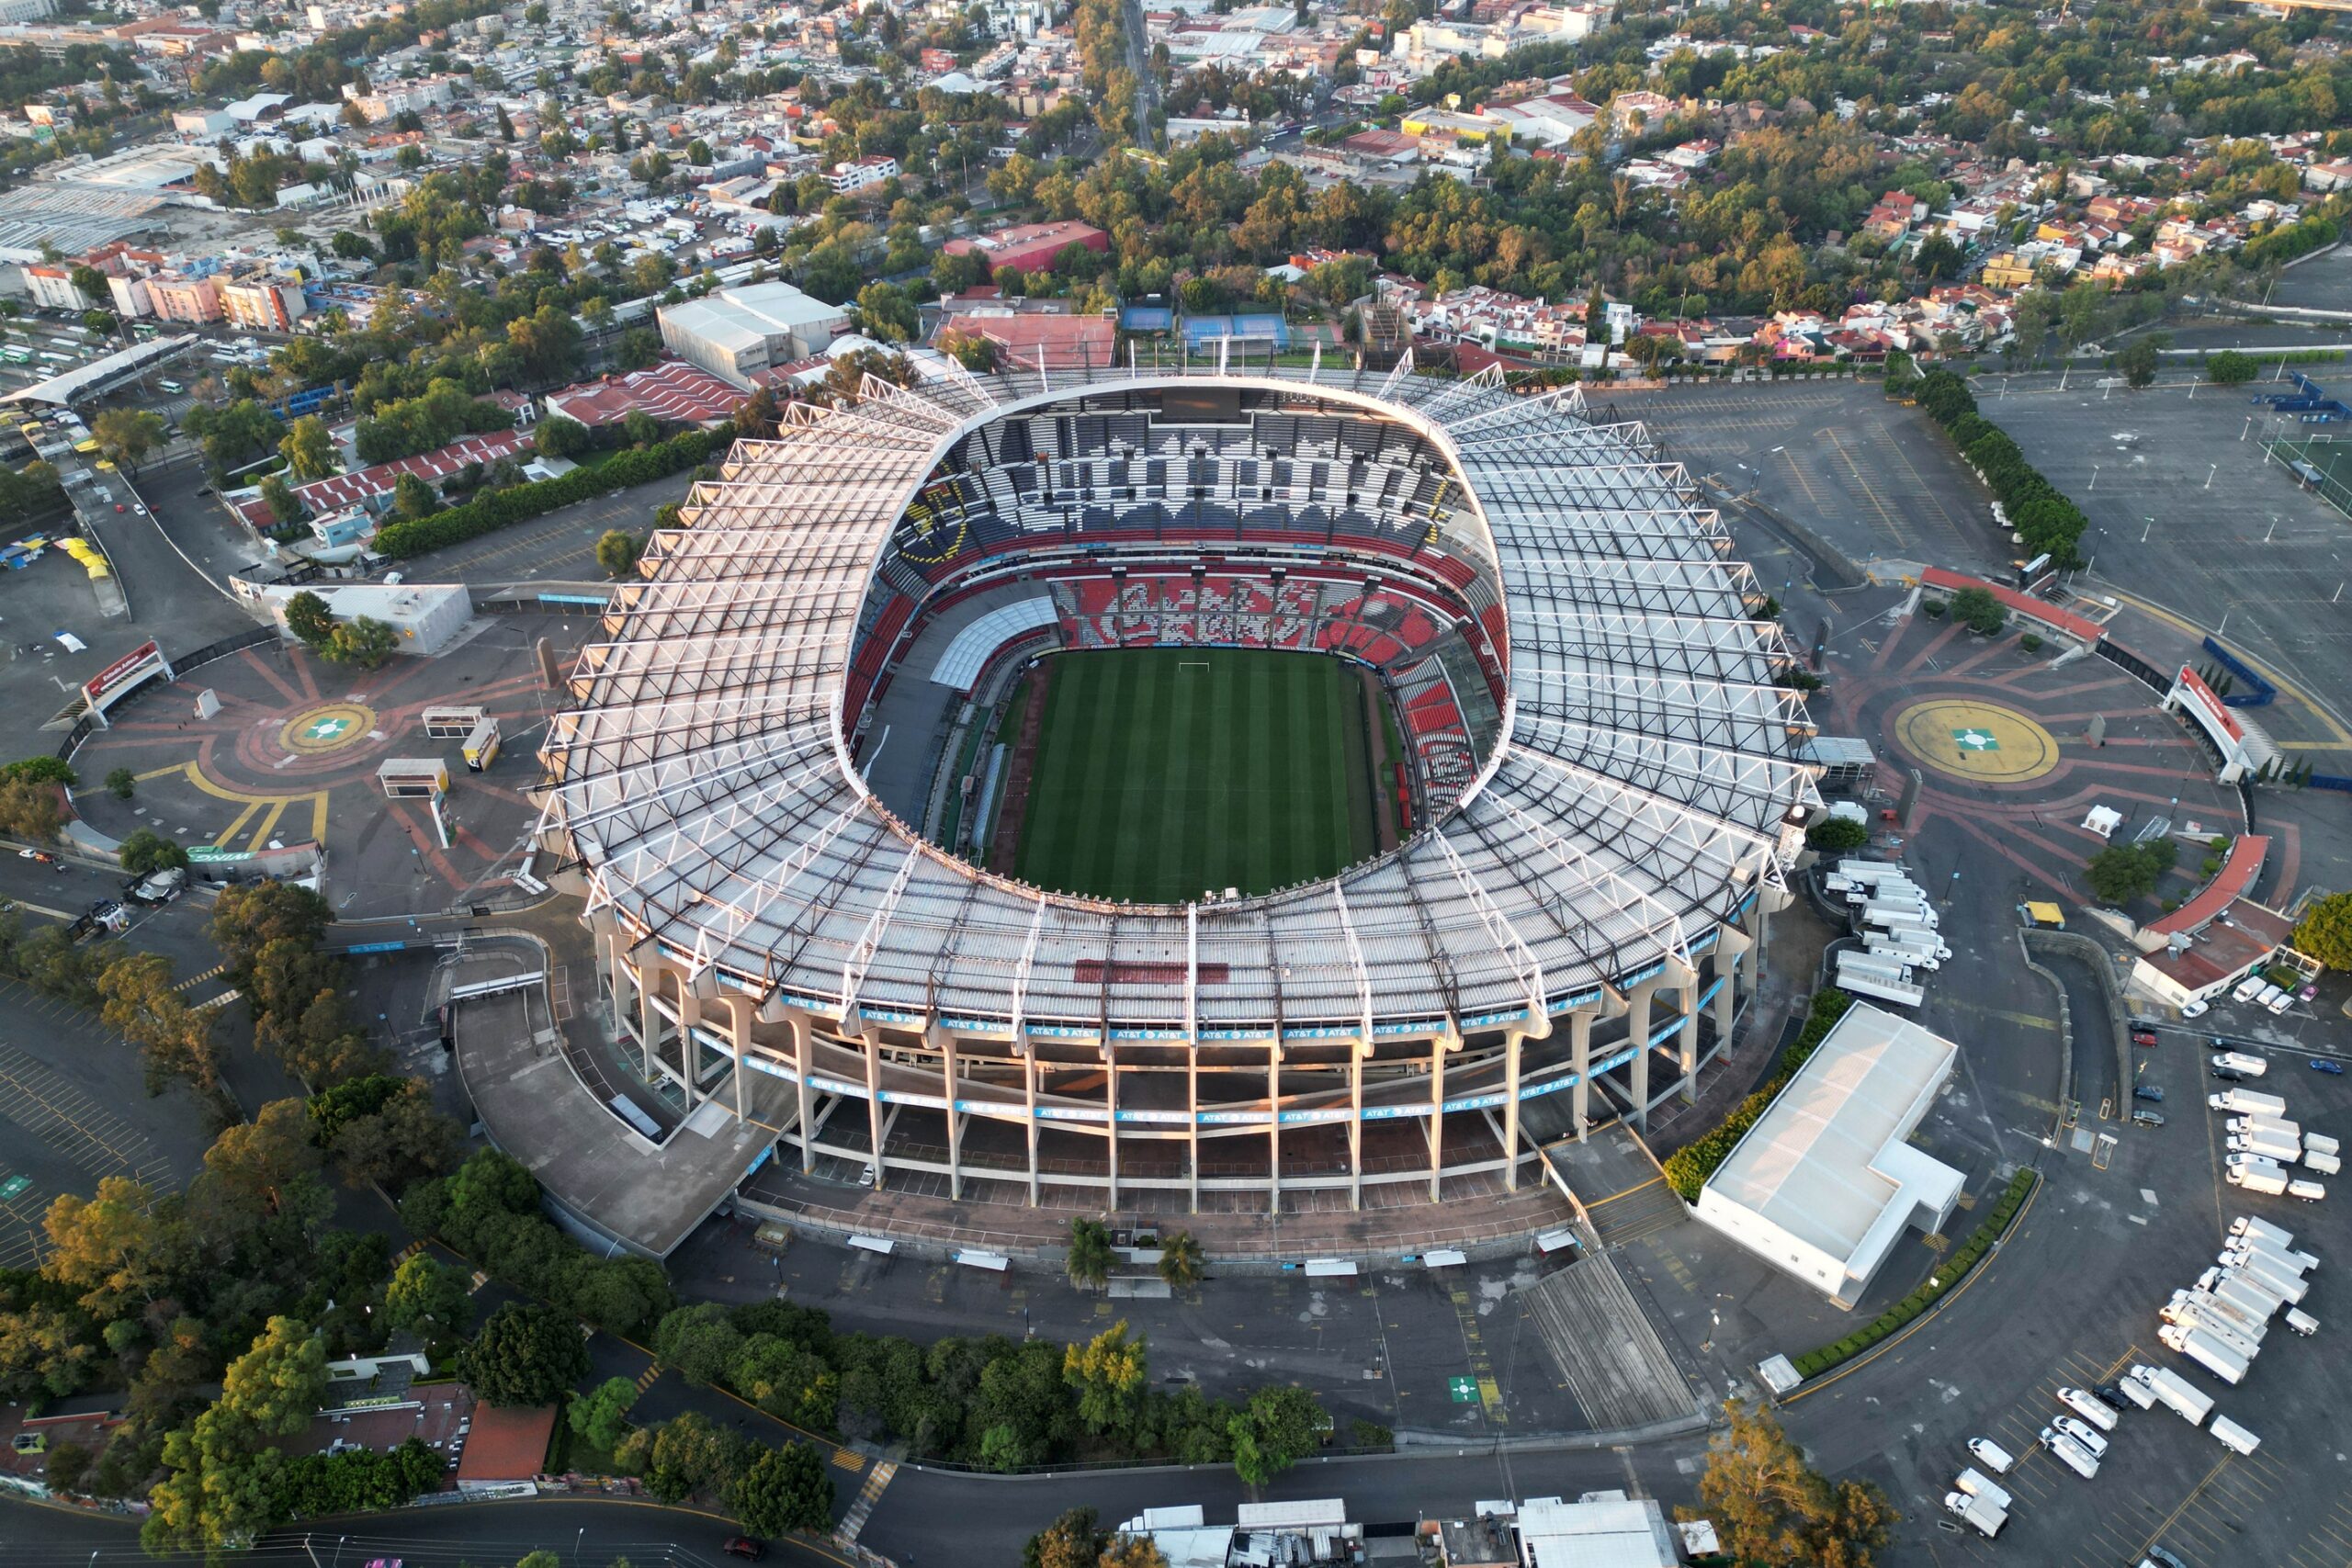 Estadio Azteca Overview: The Venue of the Match of the Club America vs Toluca Match